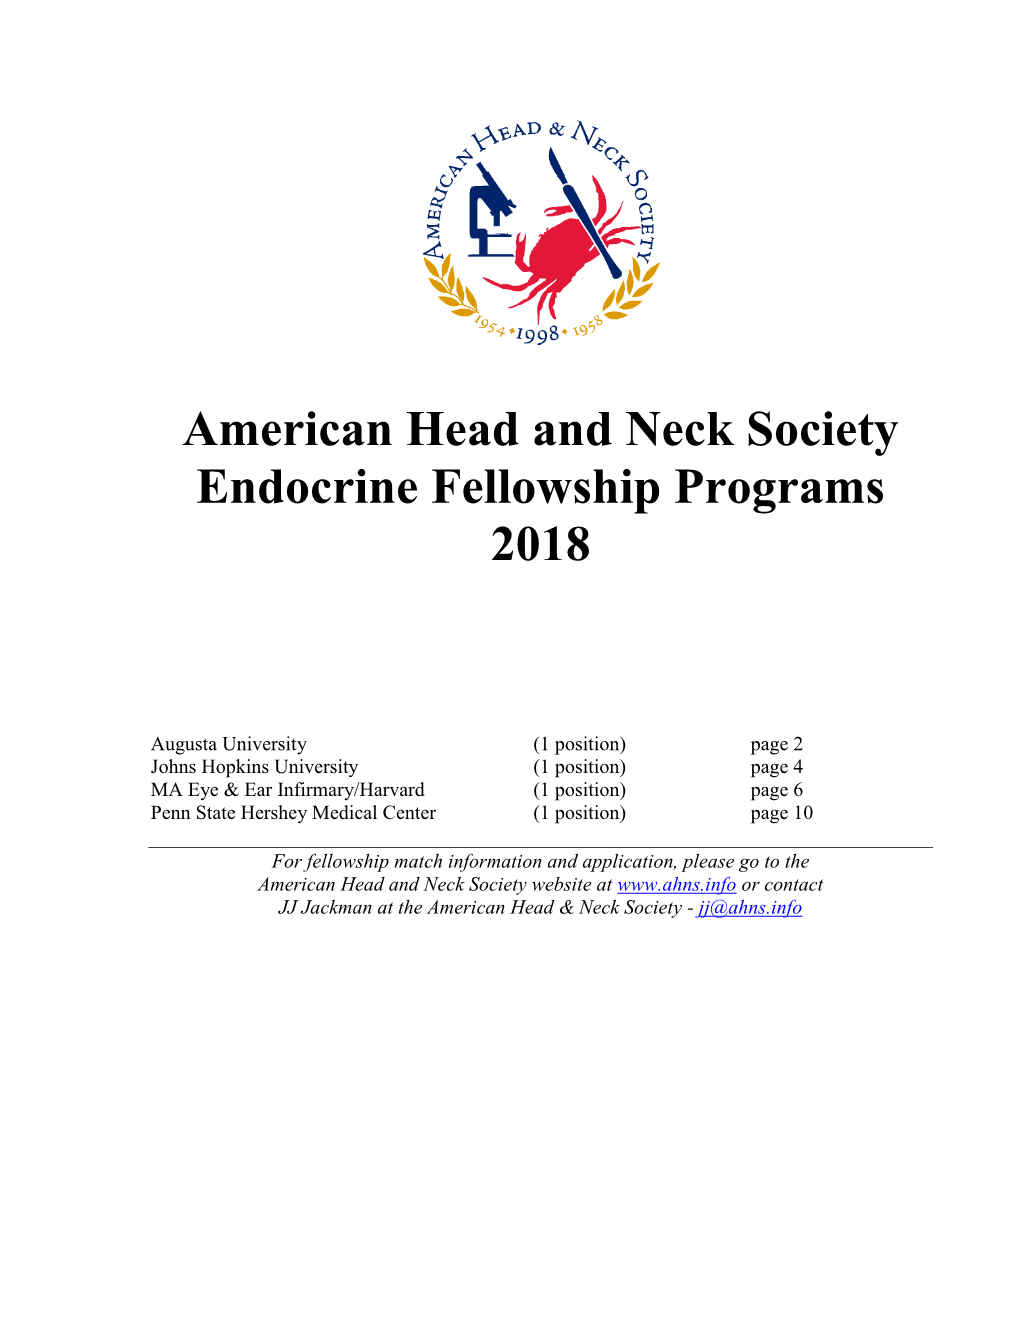 American Head and Neck Society Endocrine Fellowship Programs 2018